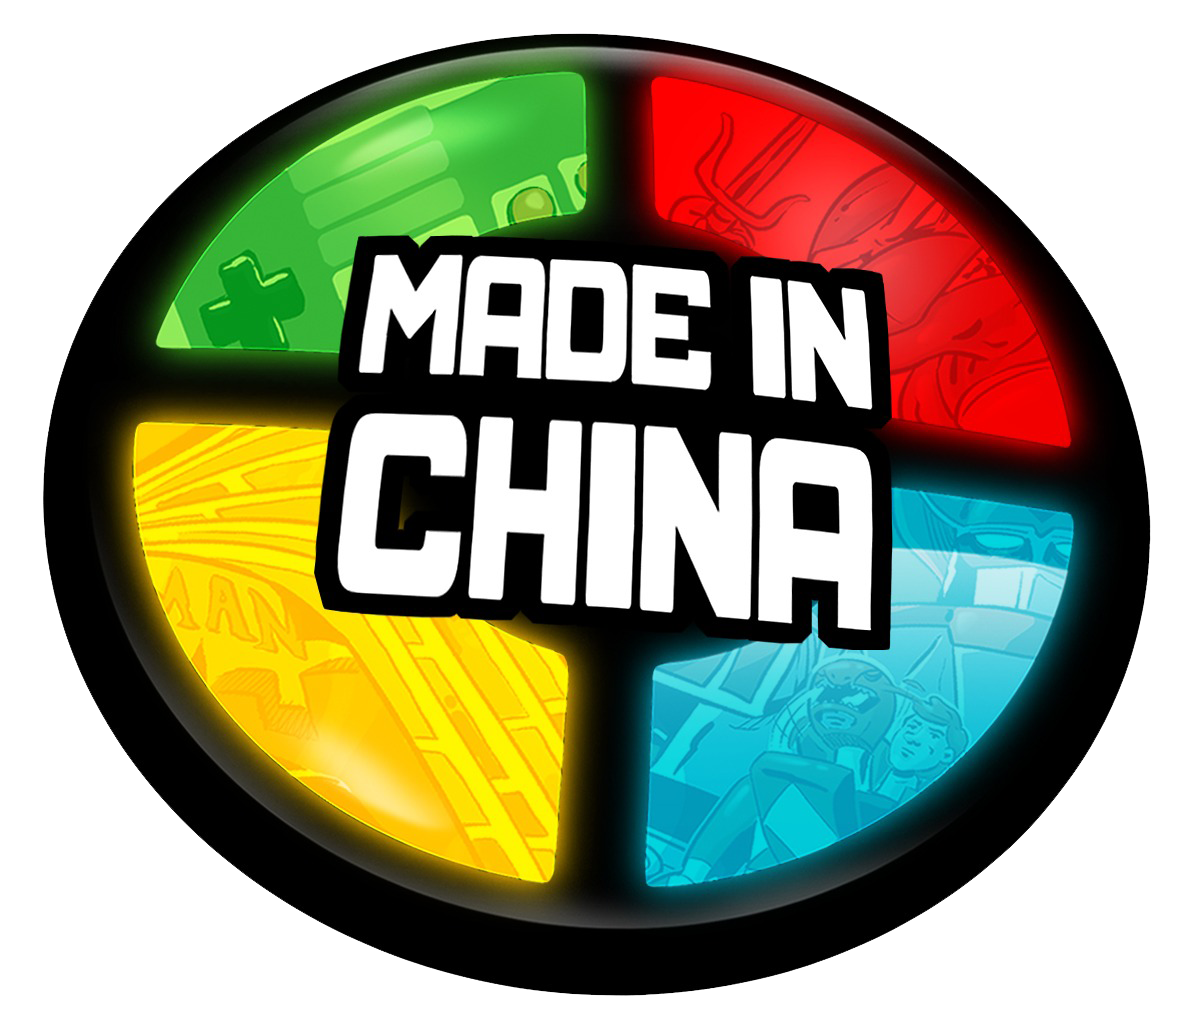 Made in china el programna del coleccionismo retro, gamer, toys, etc etc